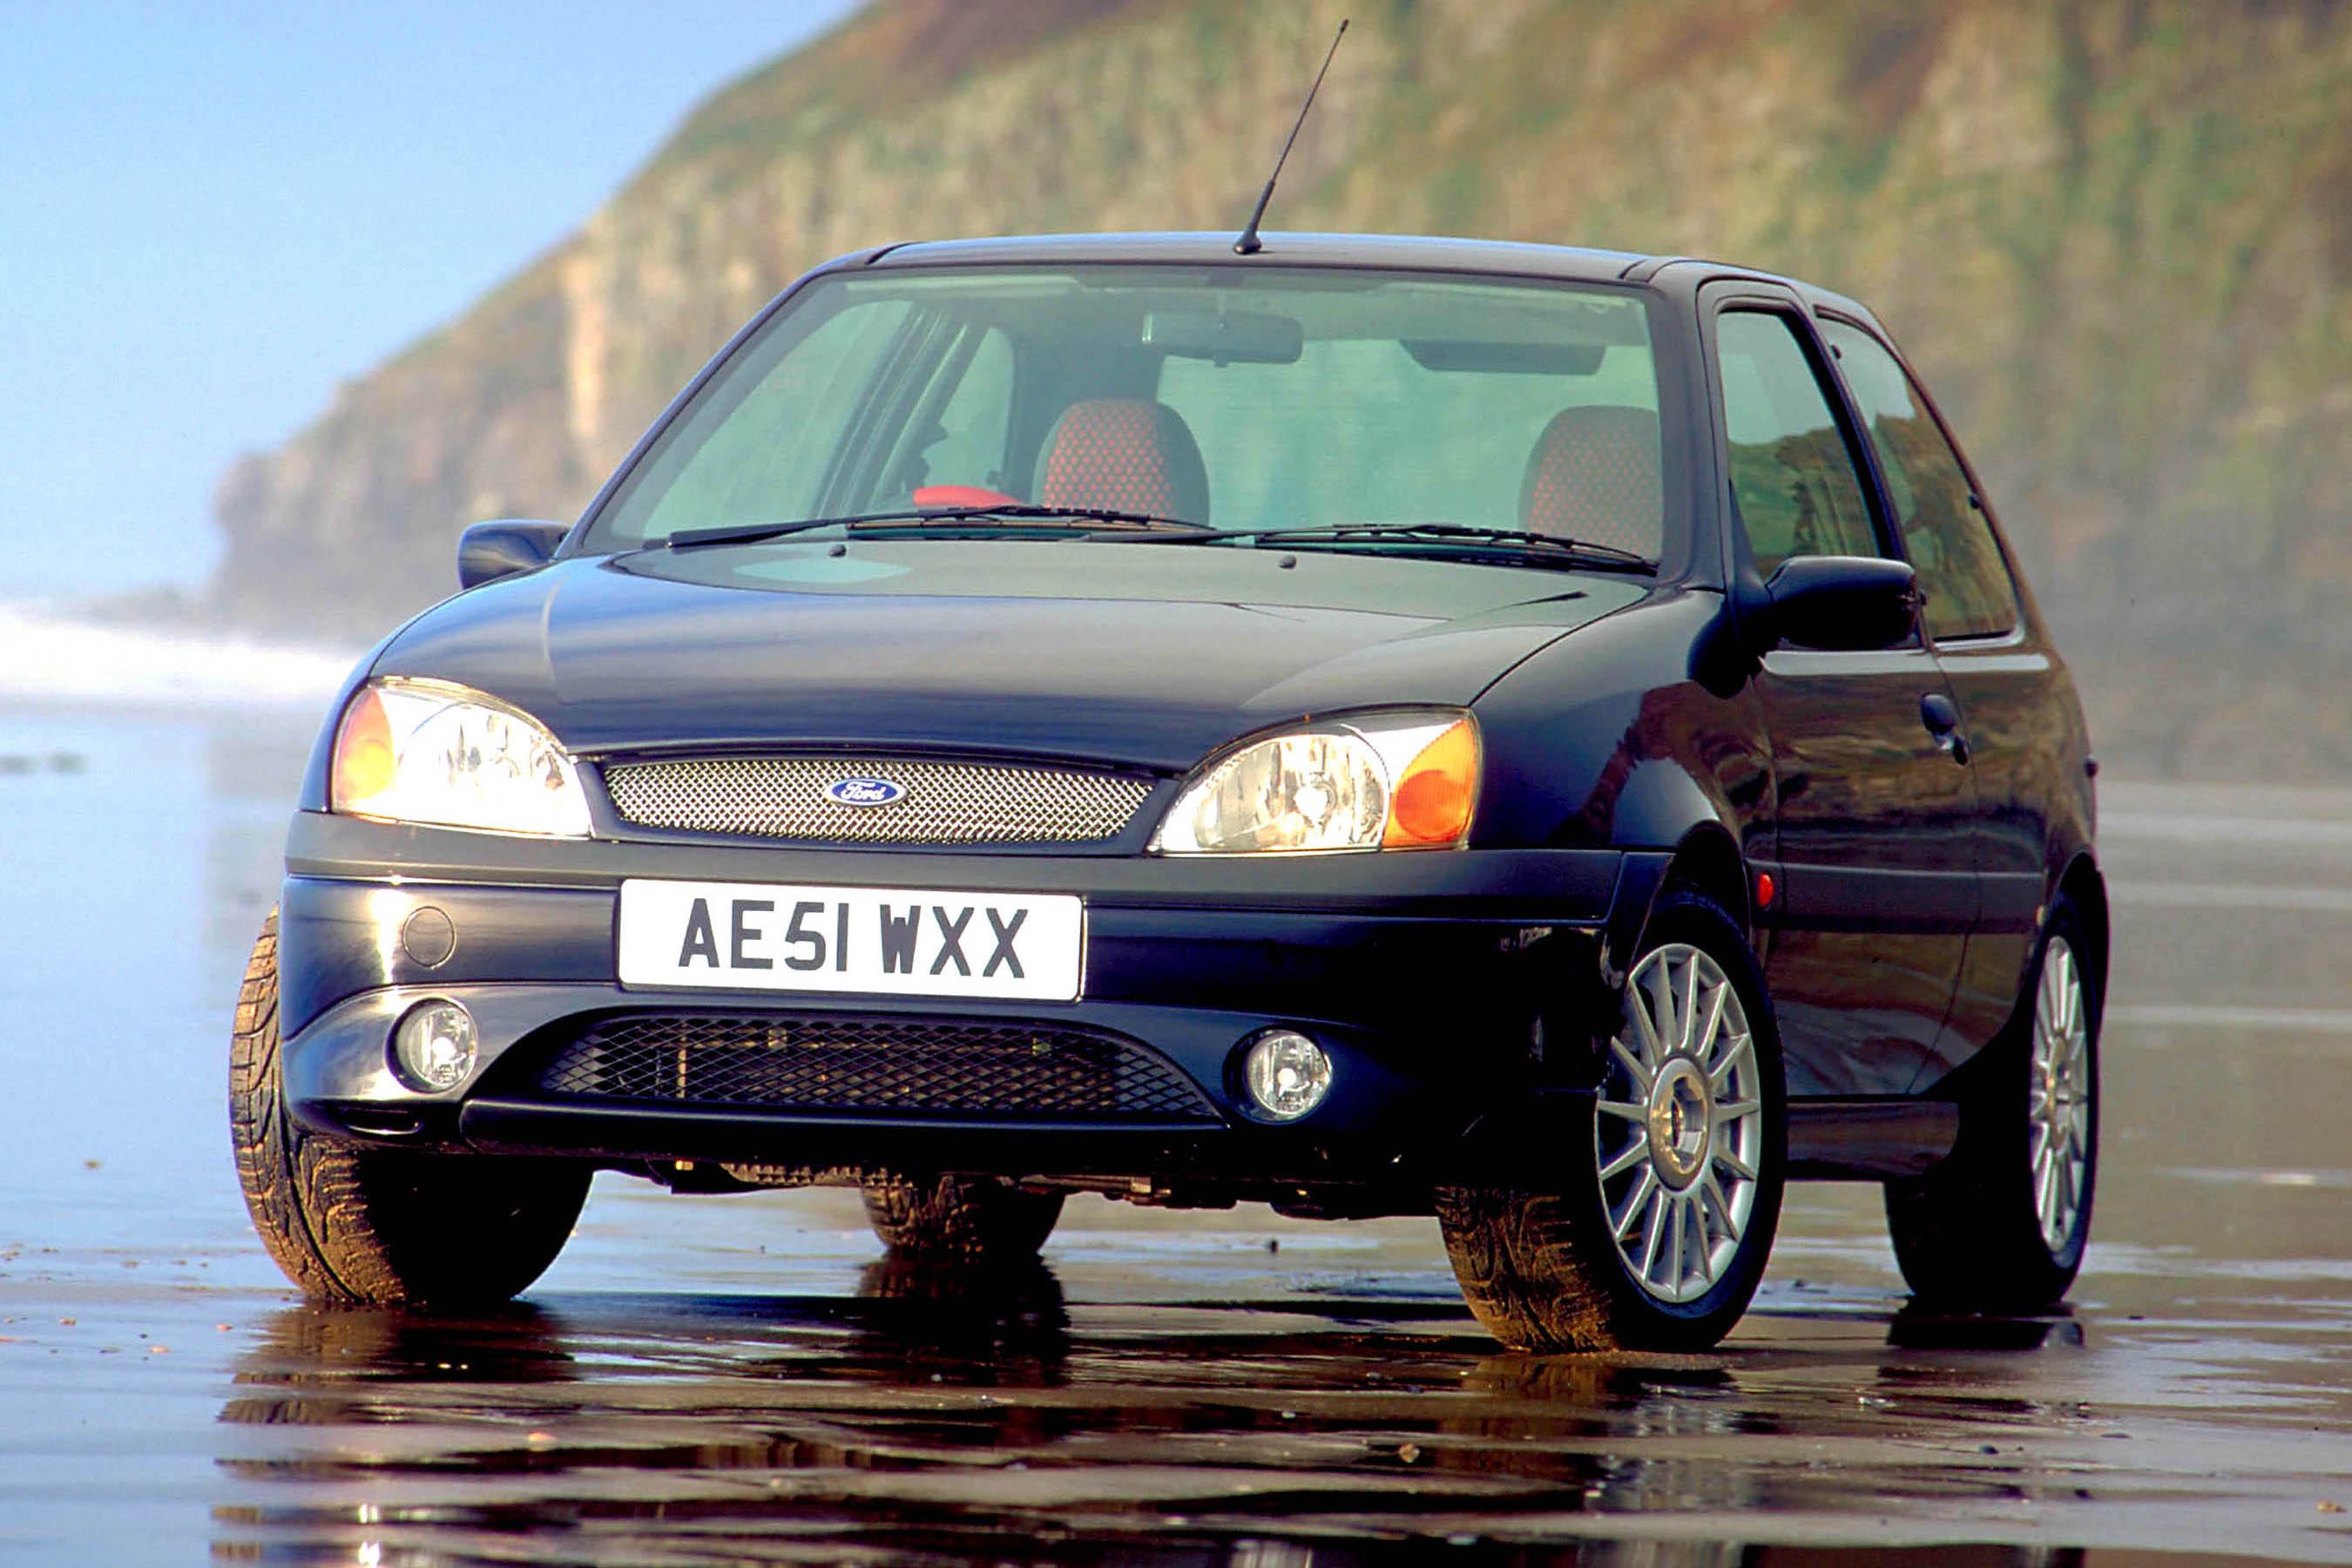 2000 год на продажу. Ford Fiesta mk4. Форд Фиеста 2000 года. Форд Фиеста 1999. Форд Фиеста 4 поколения.